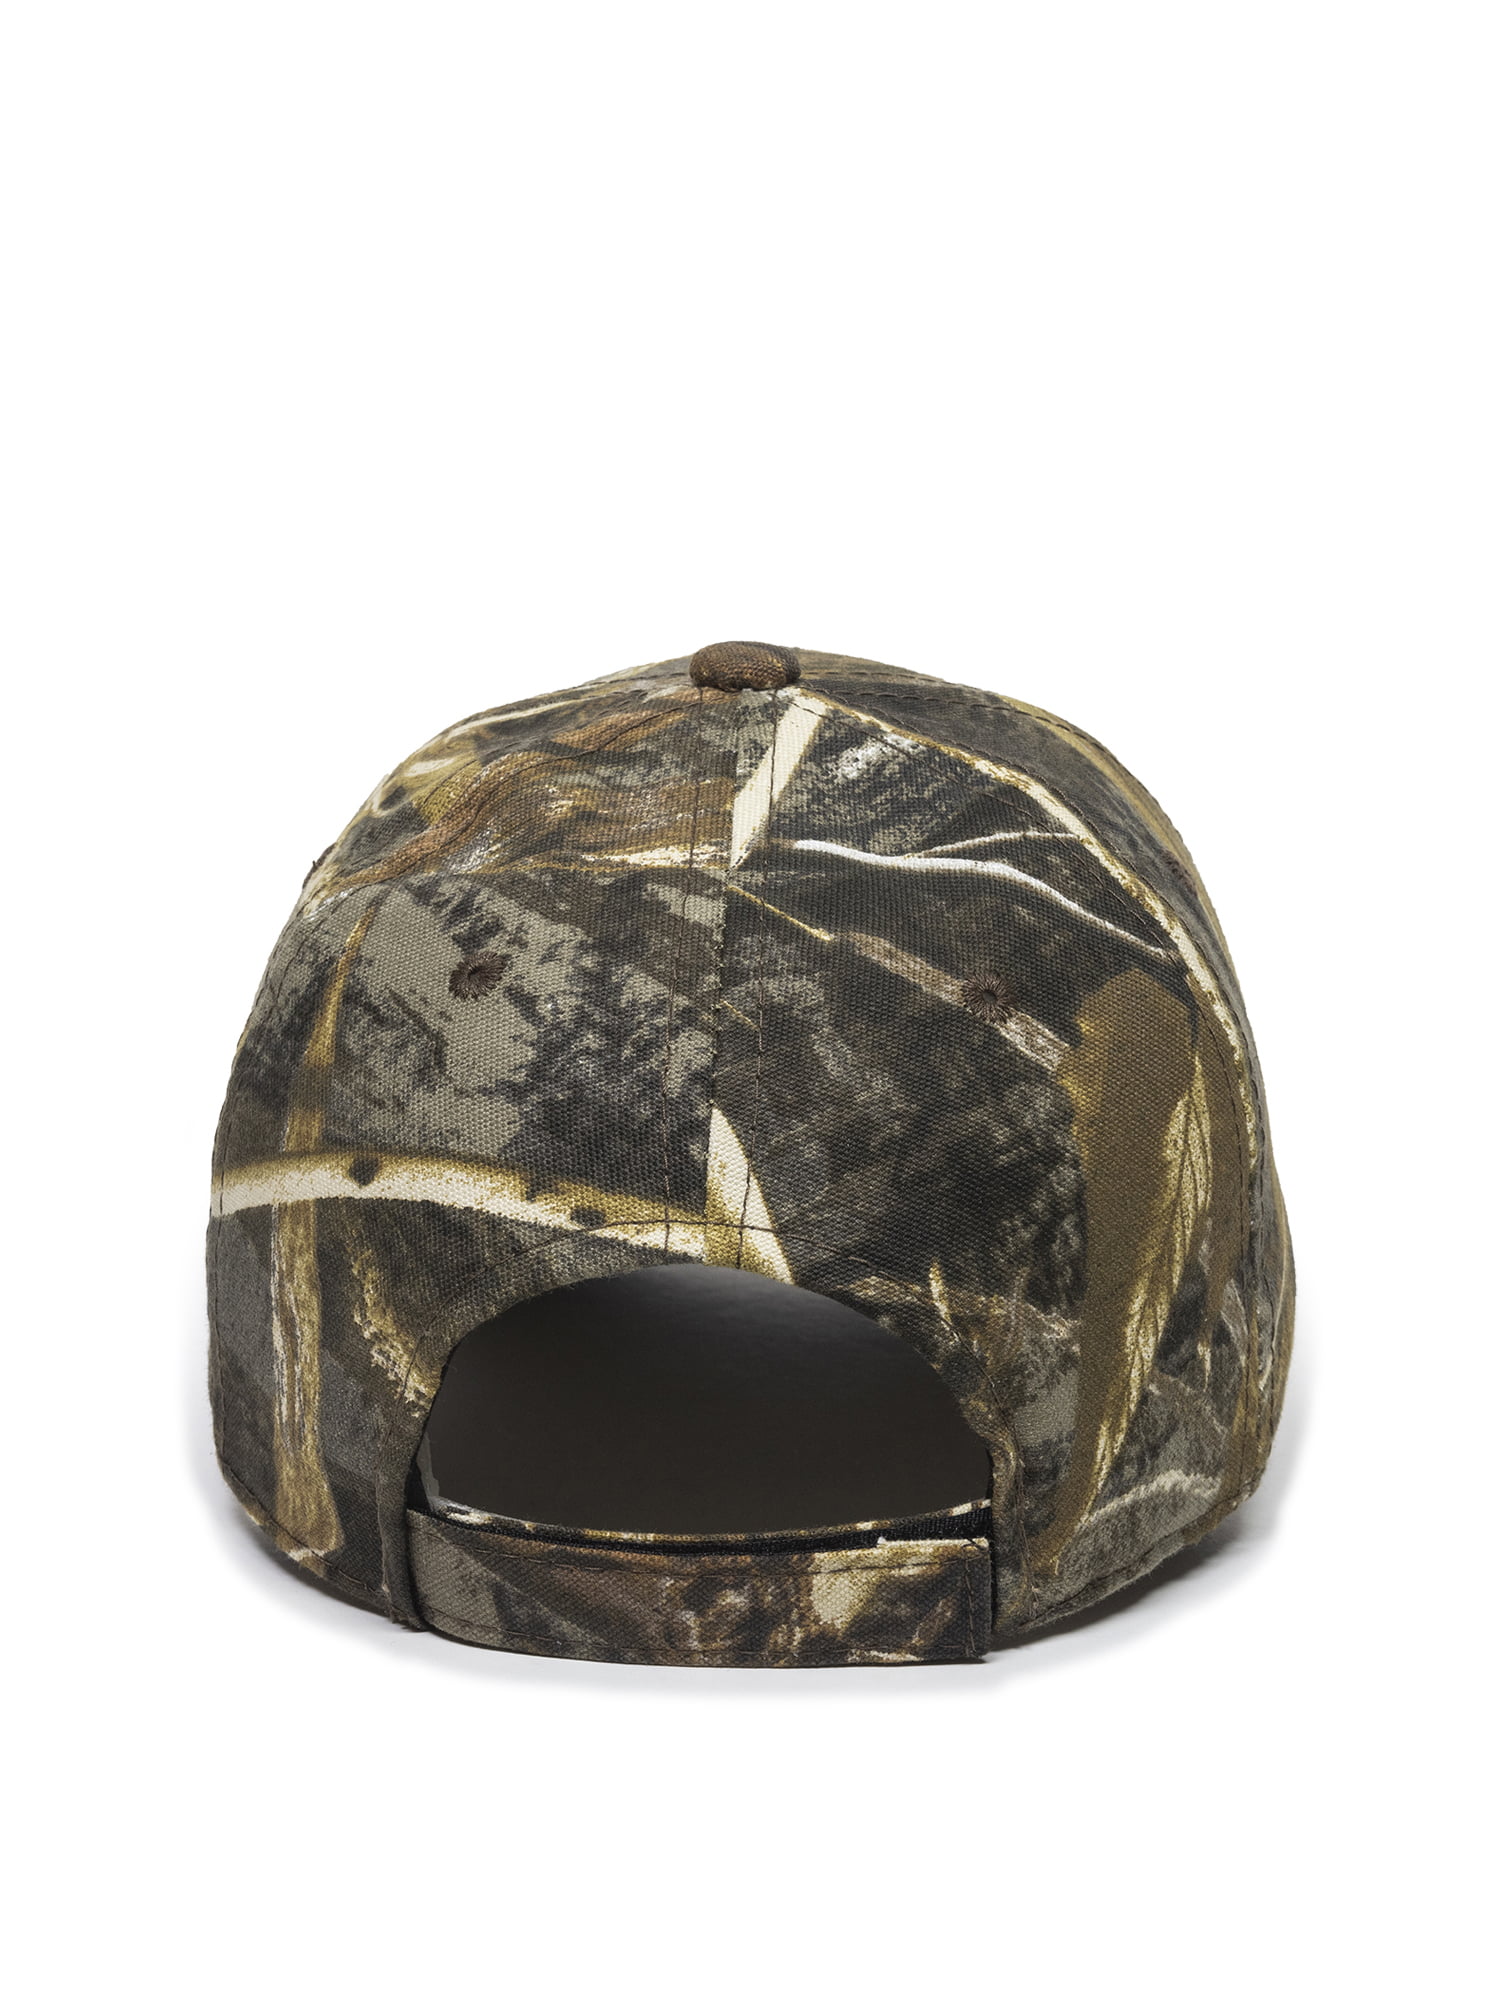 Realtree MAX-5 Camo Cap Ball Cap Hunting Hat.Adjust Snap Back..NWT